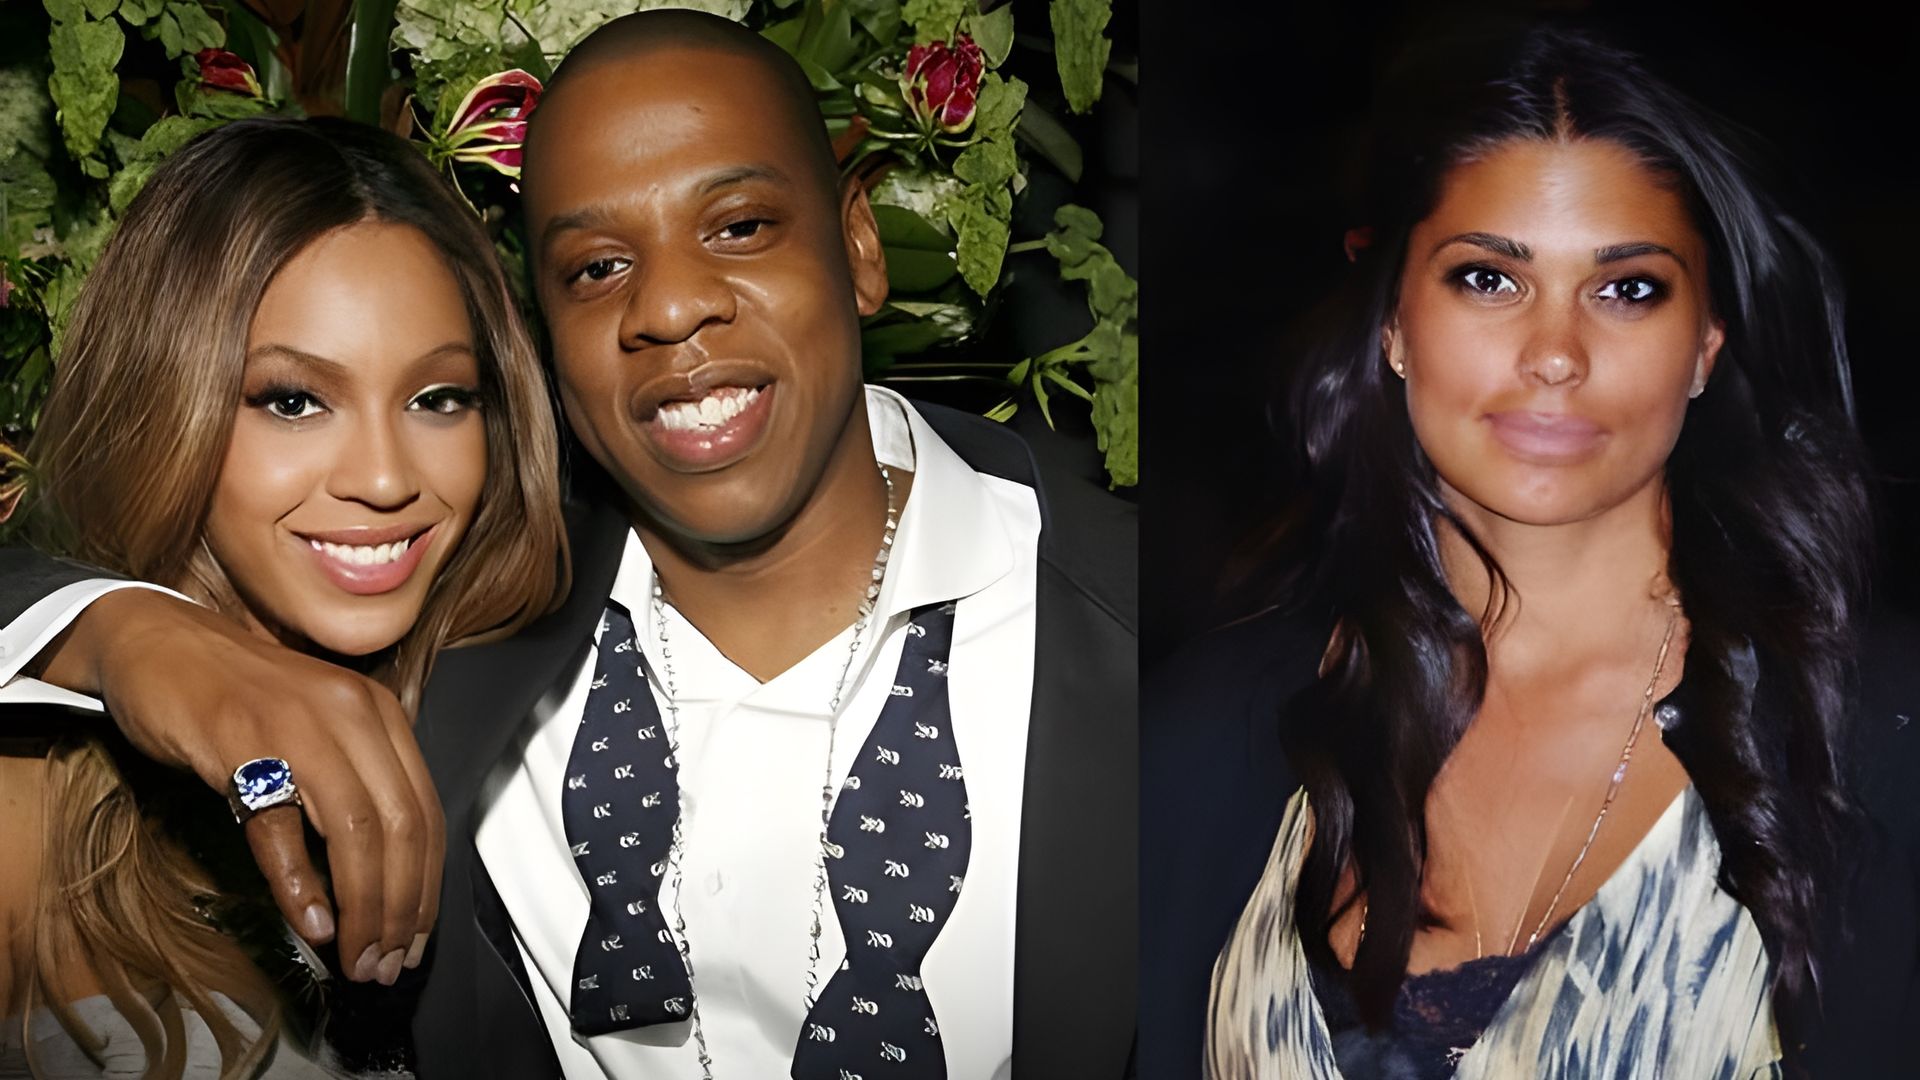 Jay Z was unfaithful to Beyoncé with designer Rachel Roy